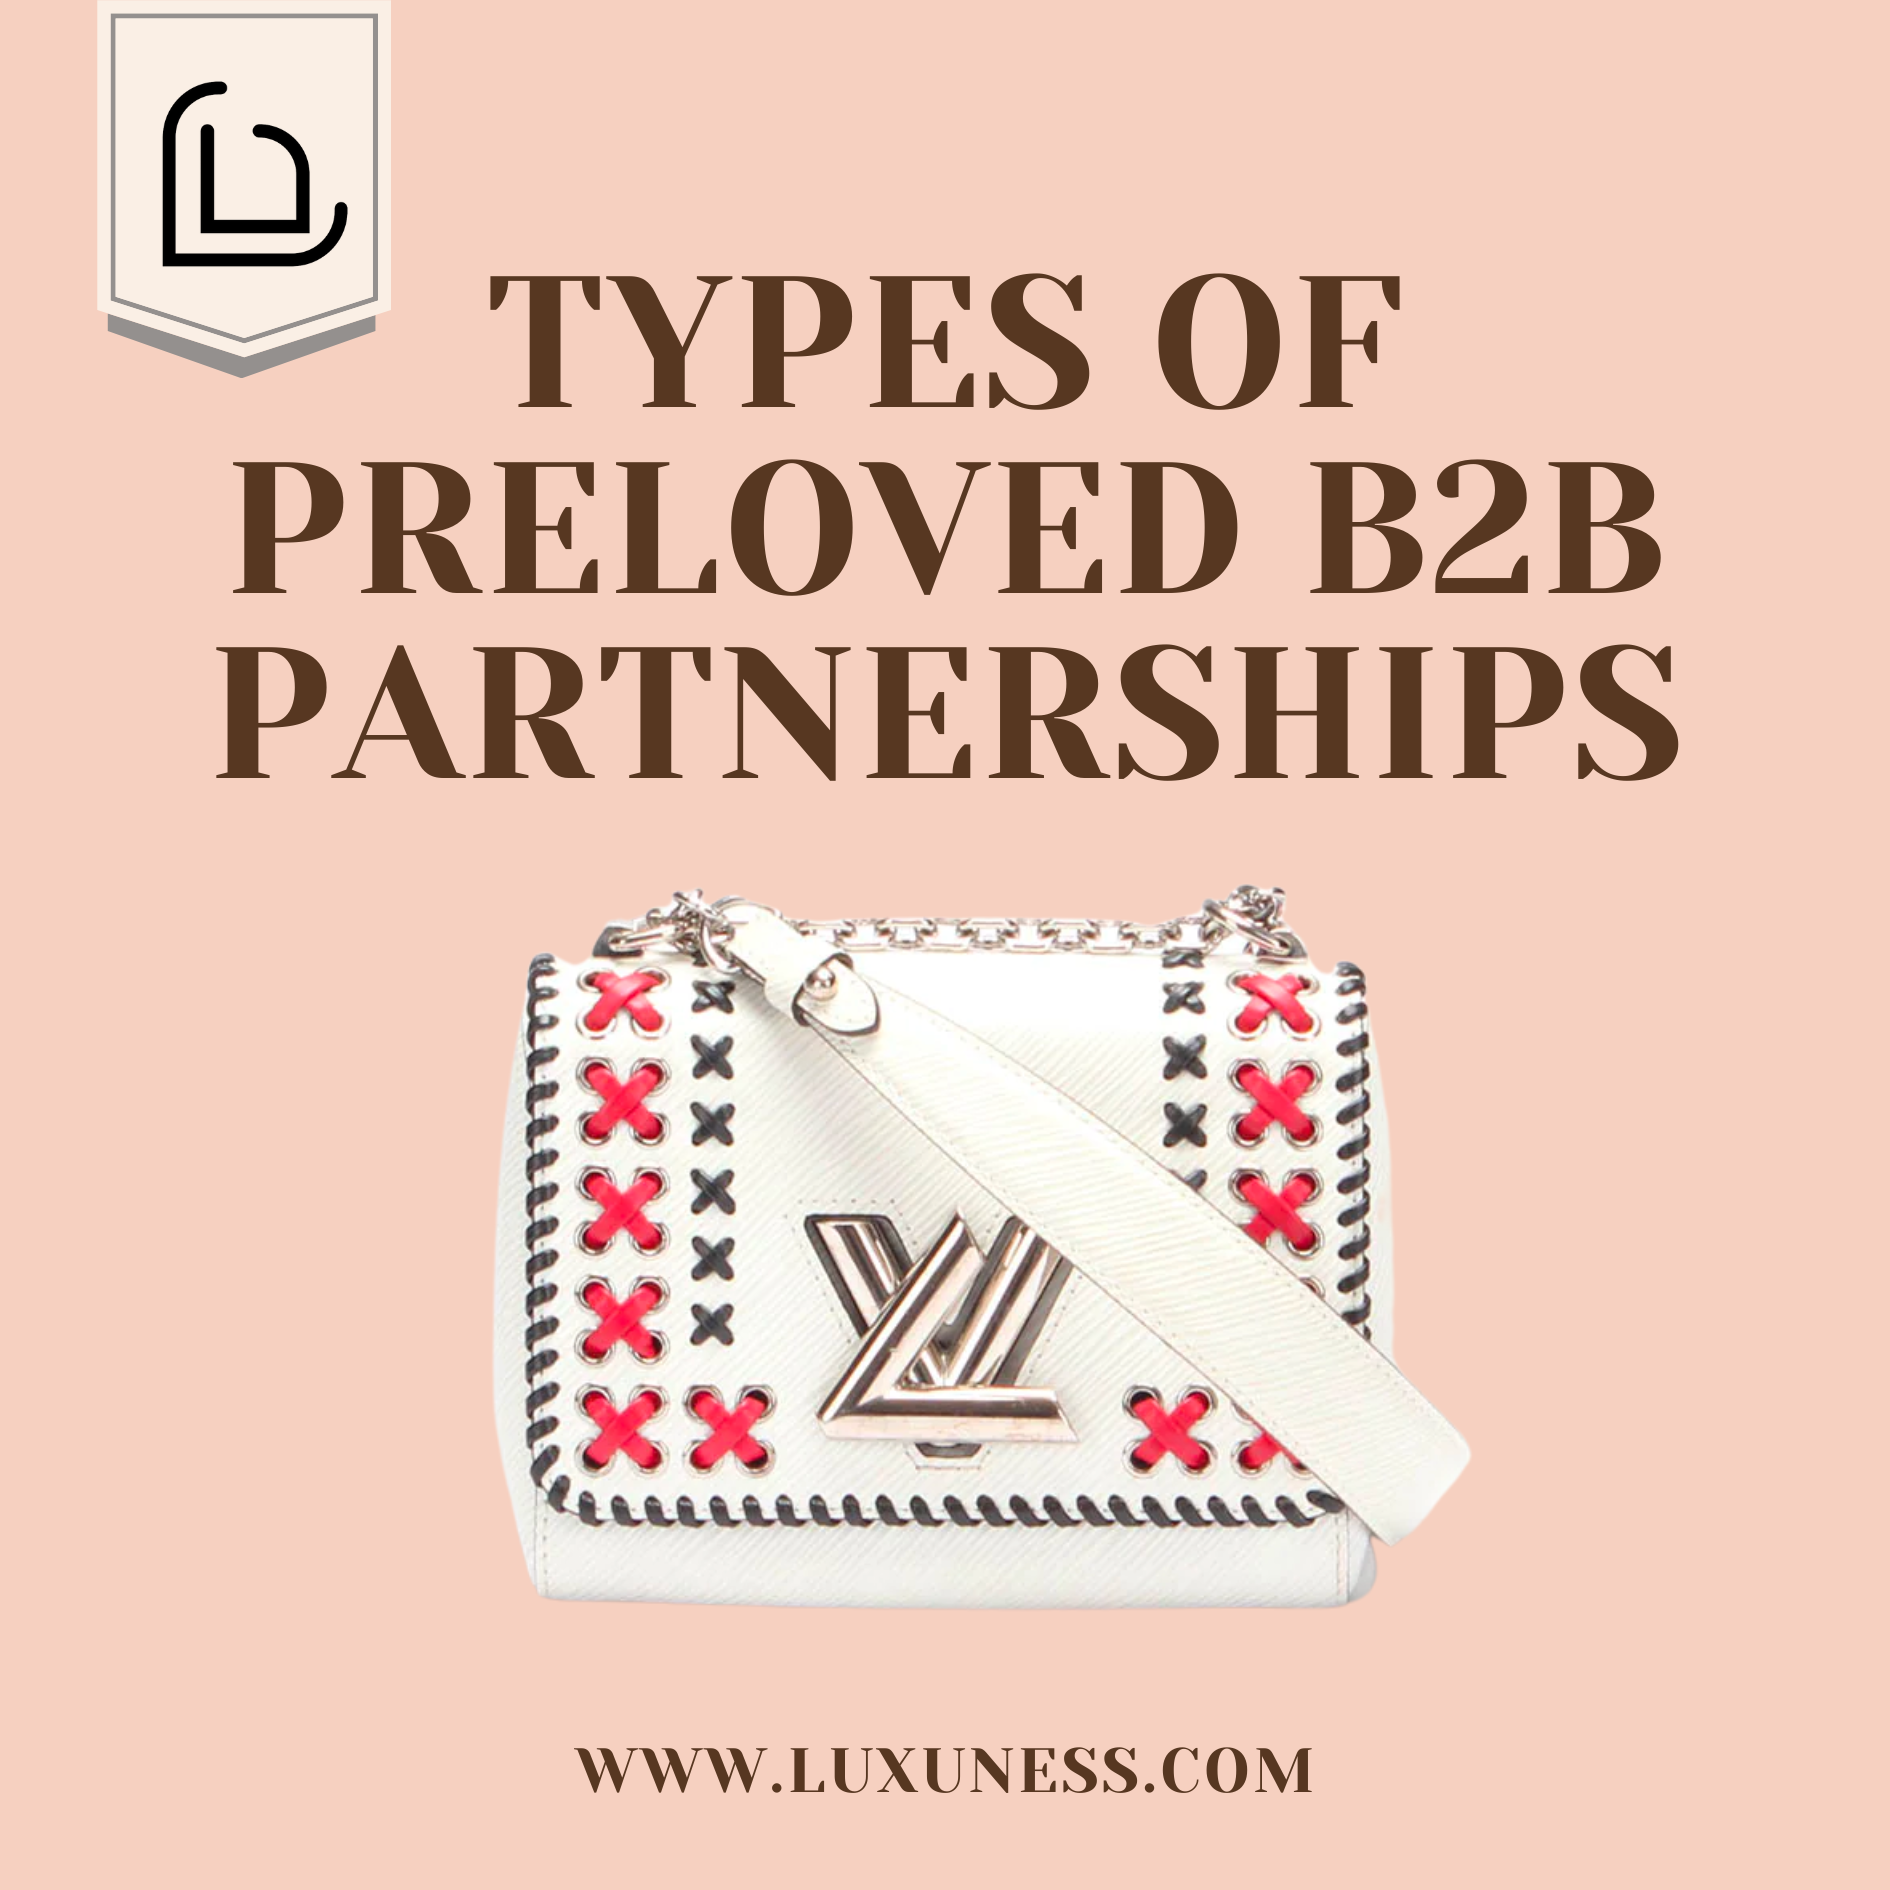 Types of Preloved B2B Partnerships